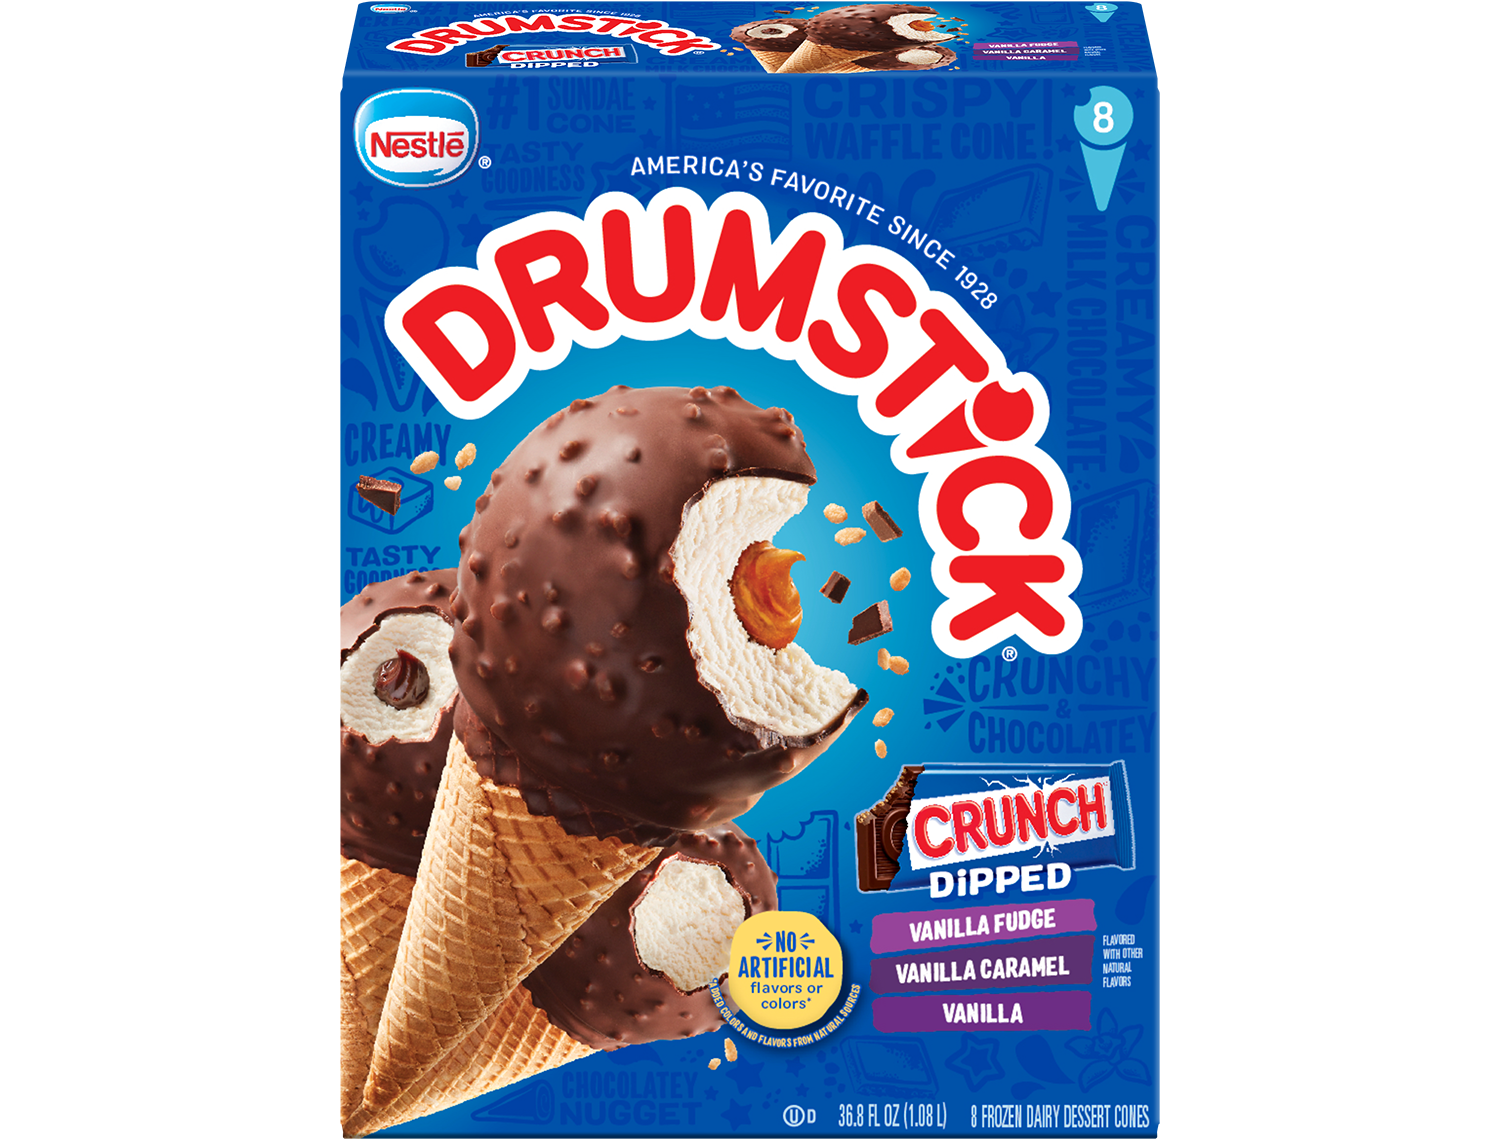 Drumstick crunch dipped vanilla, vanilla caramel and vanilla fudge cones